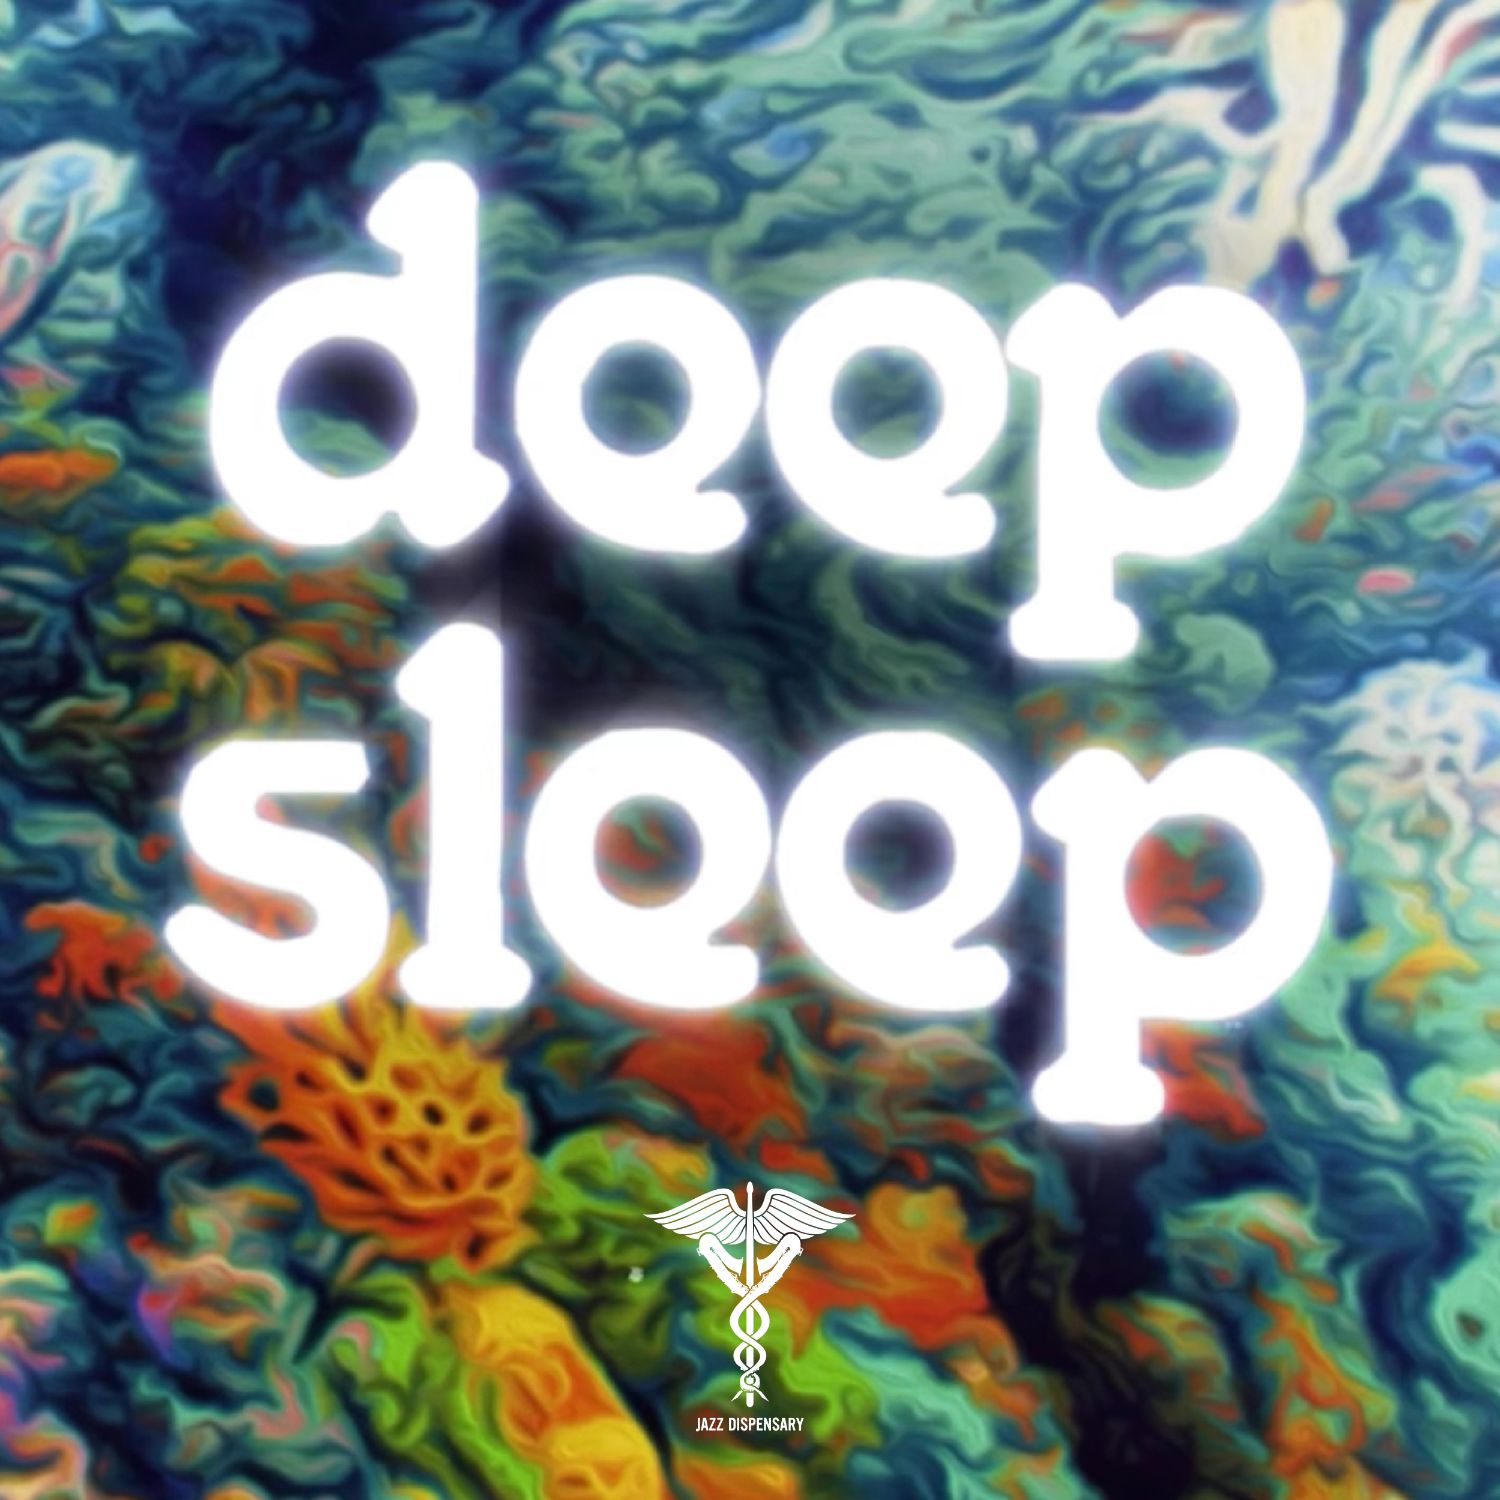 Featured image for “Deep Sleep”